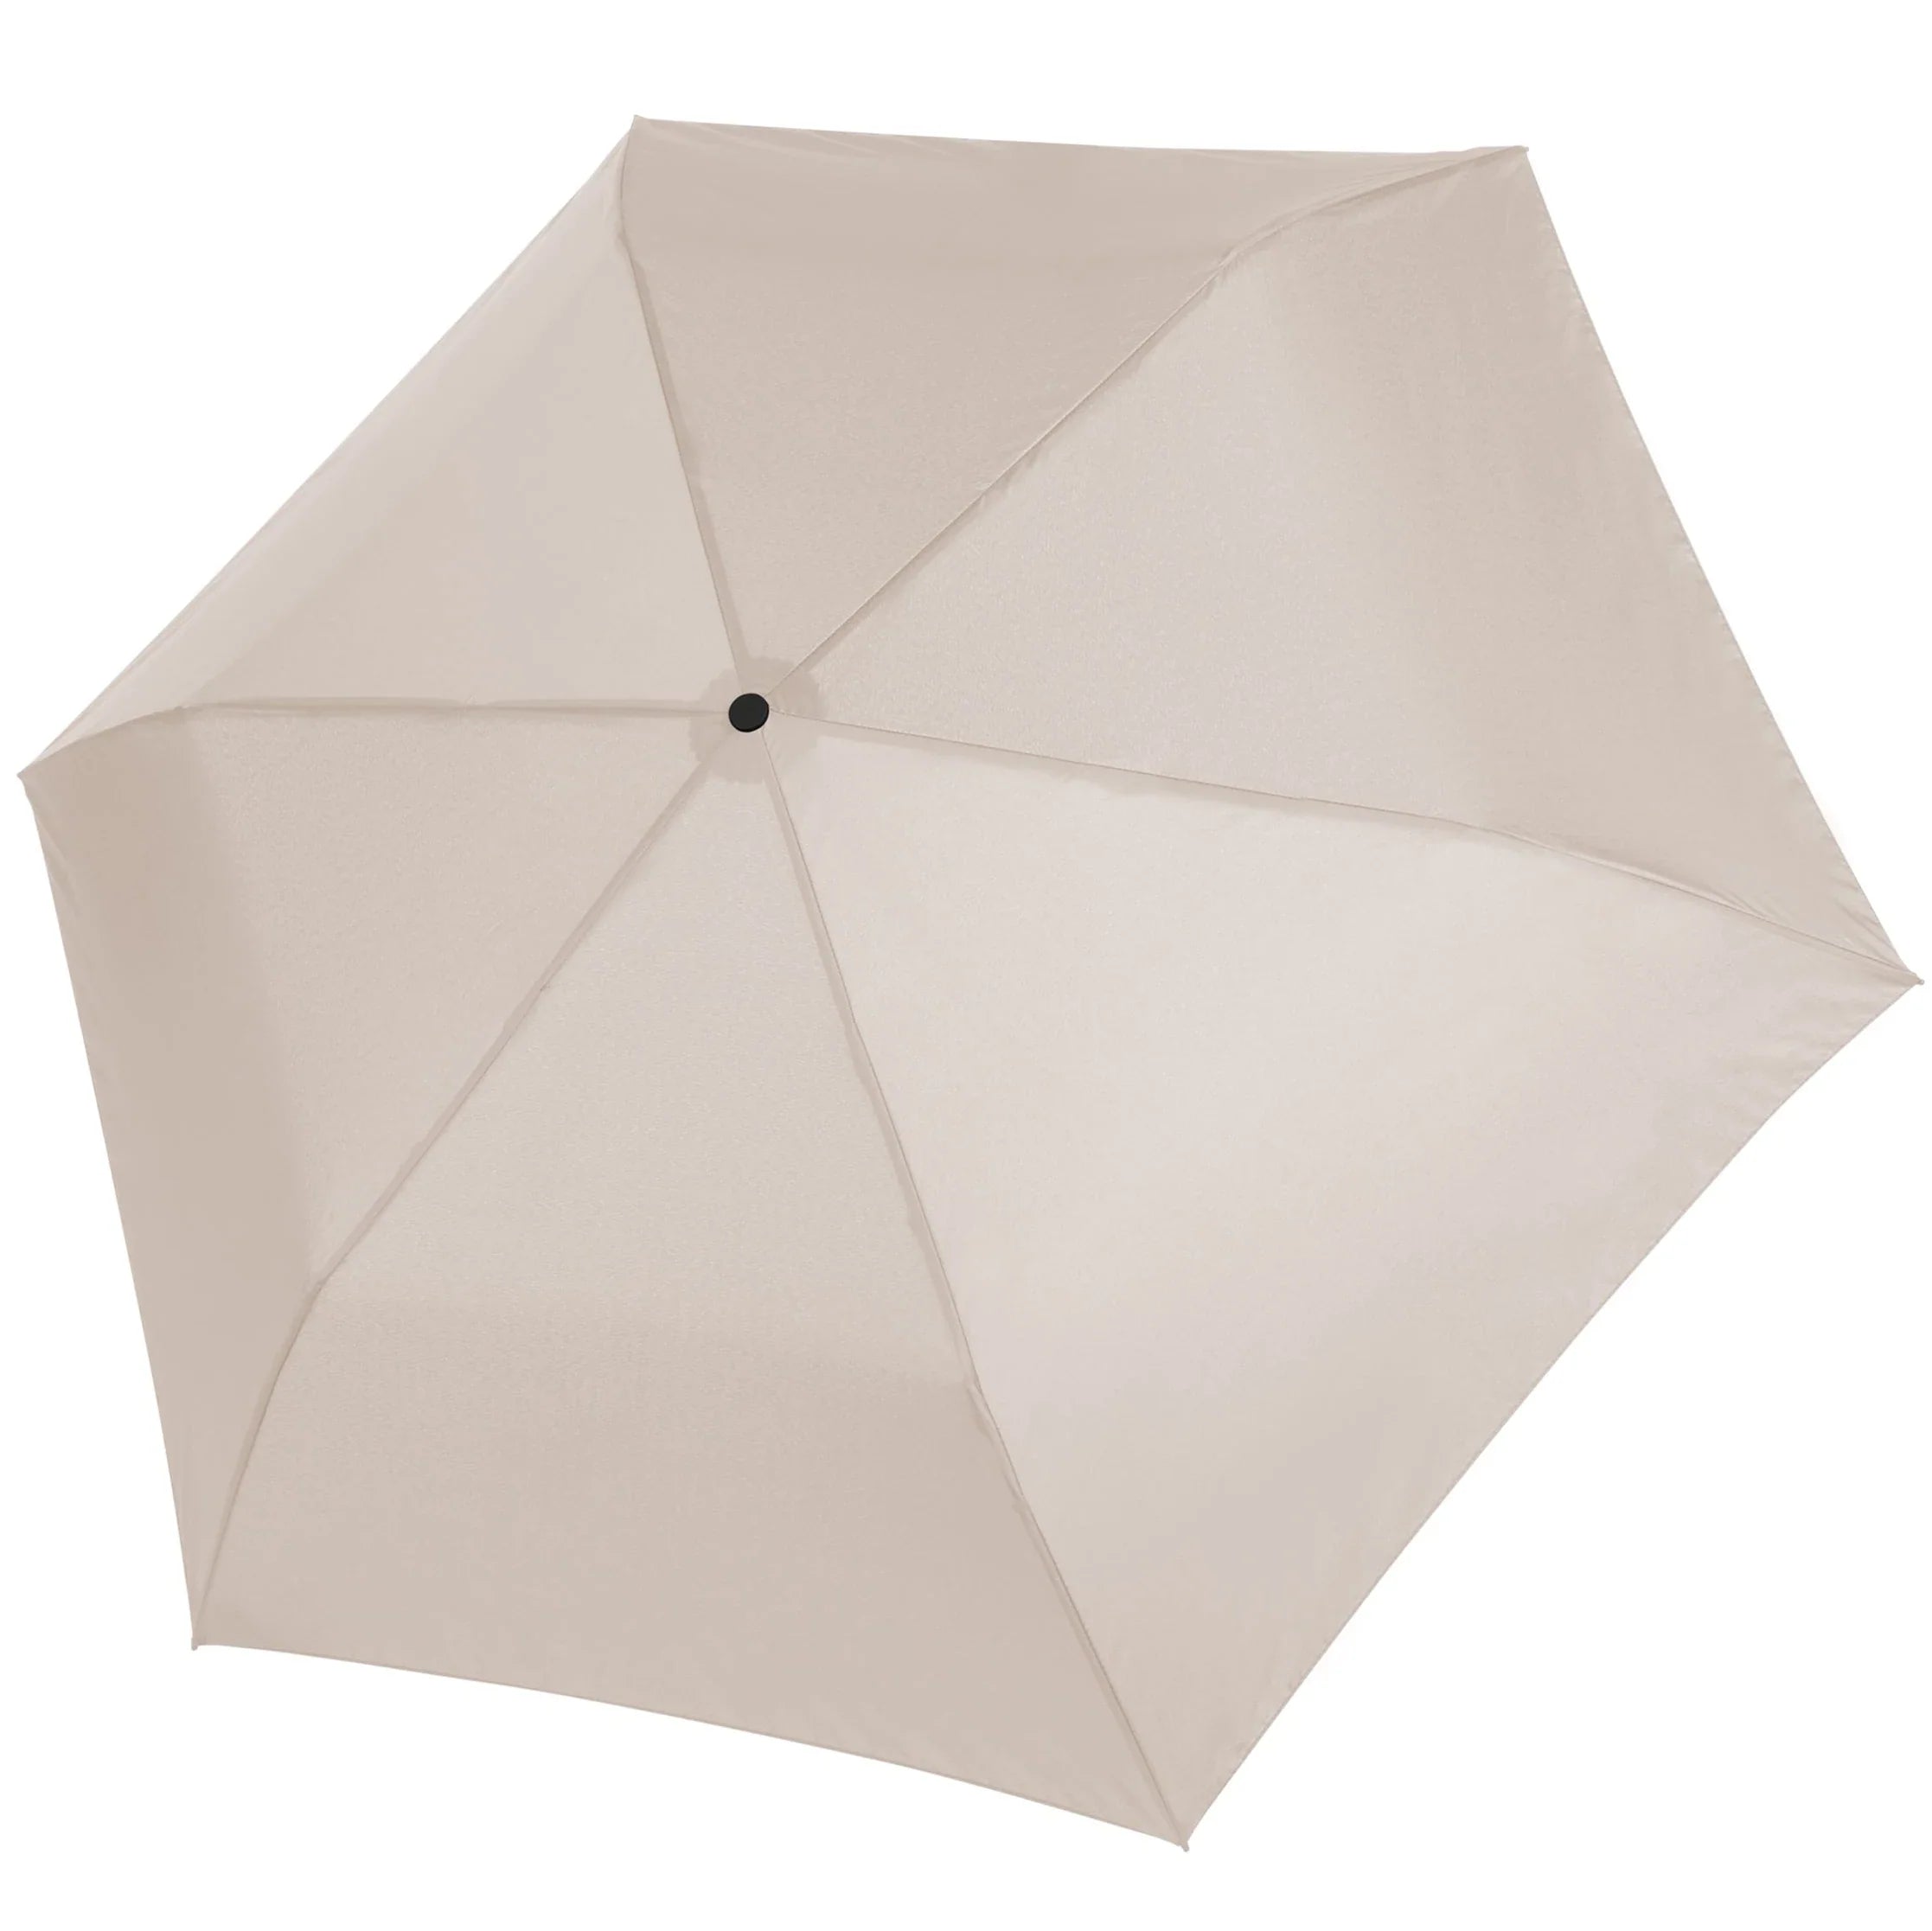 Doppler pocket umbrellas umbrella cm - Zero99 pocket black 21